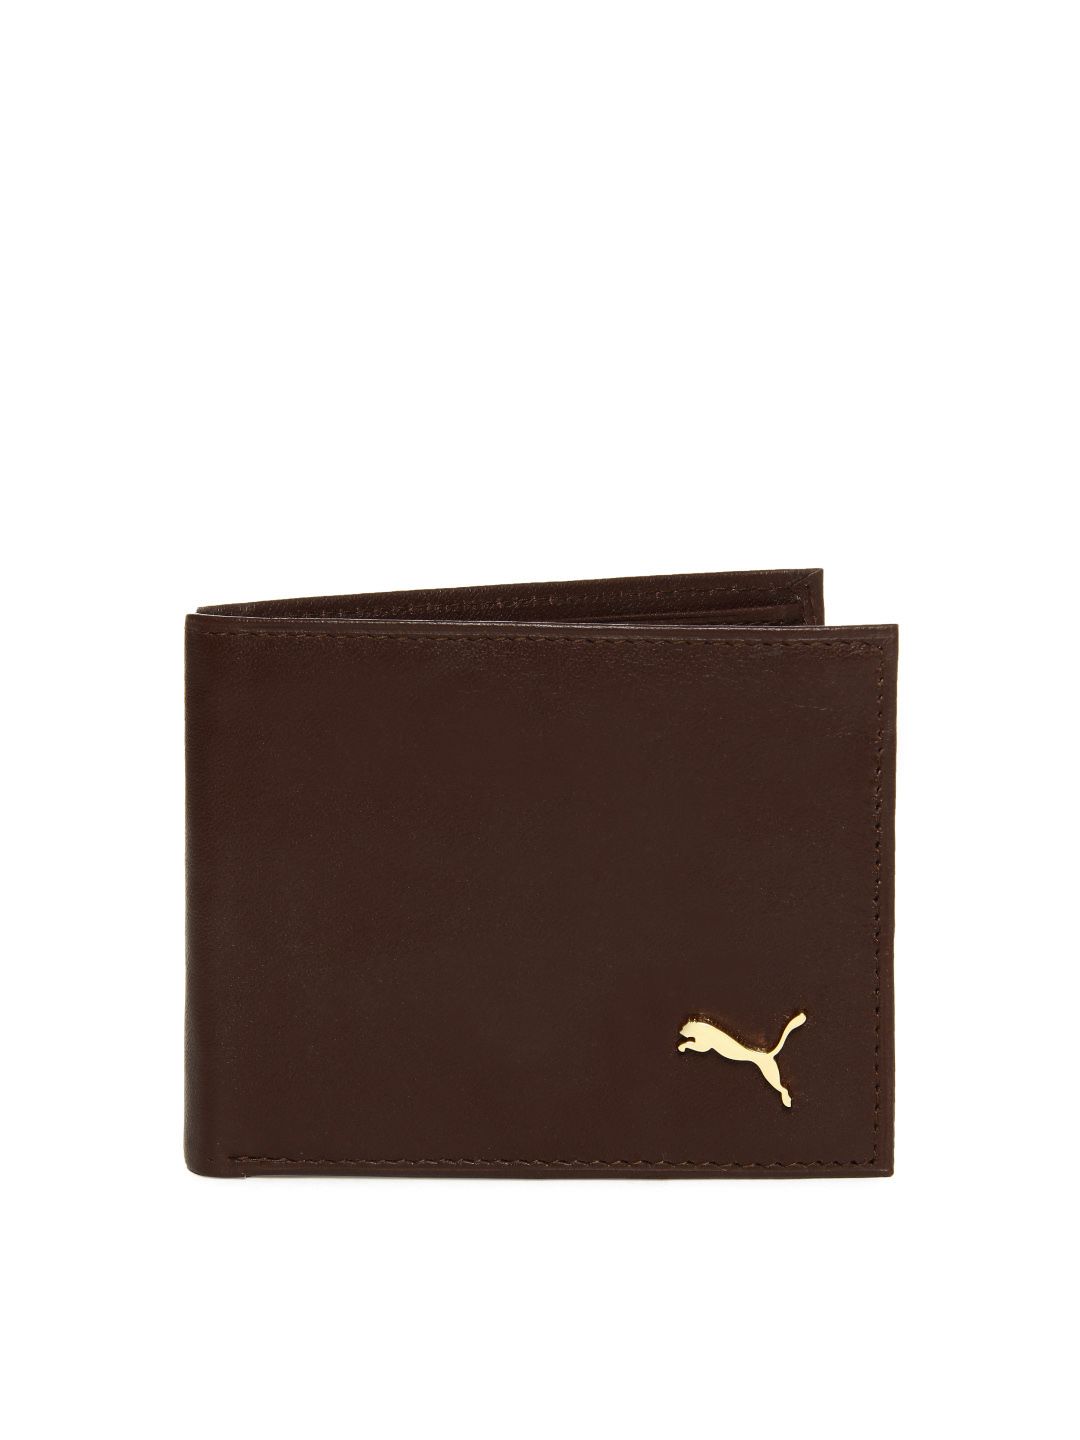 puma wallets brown